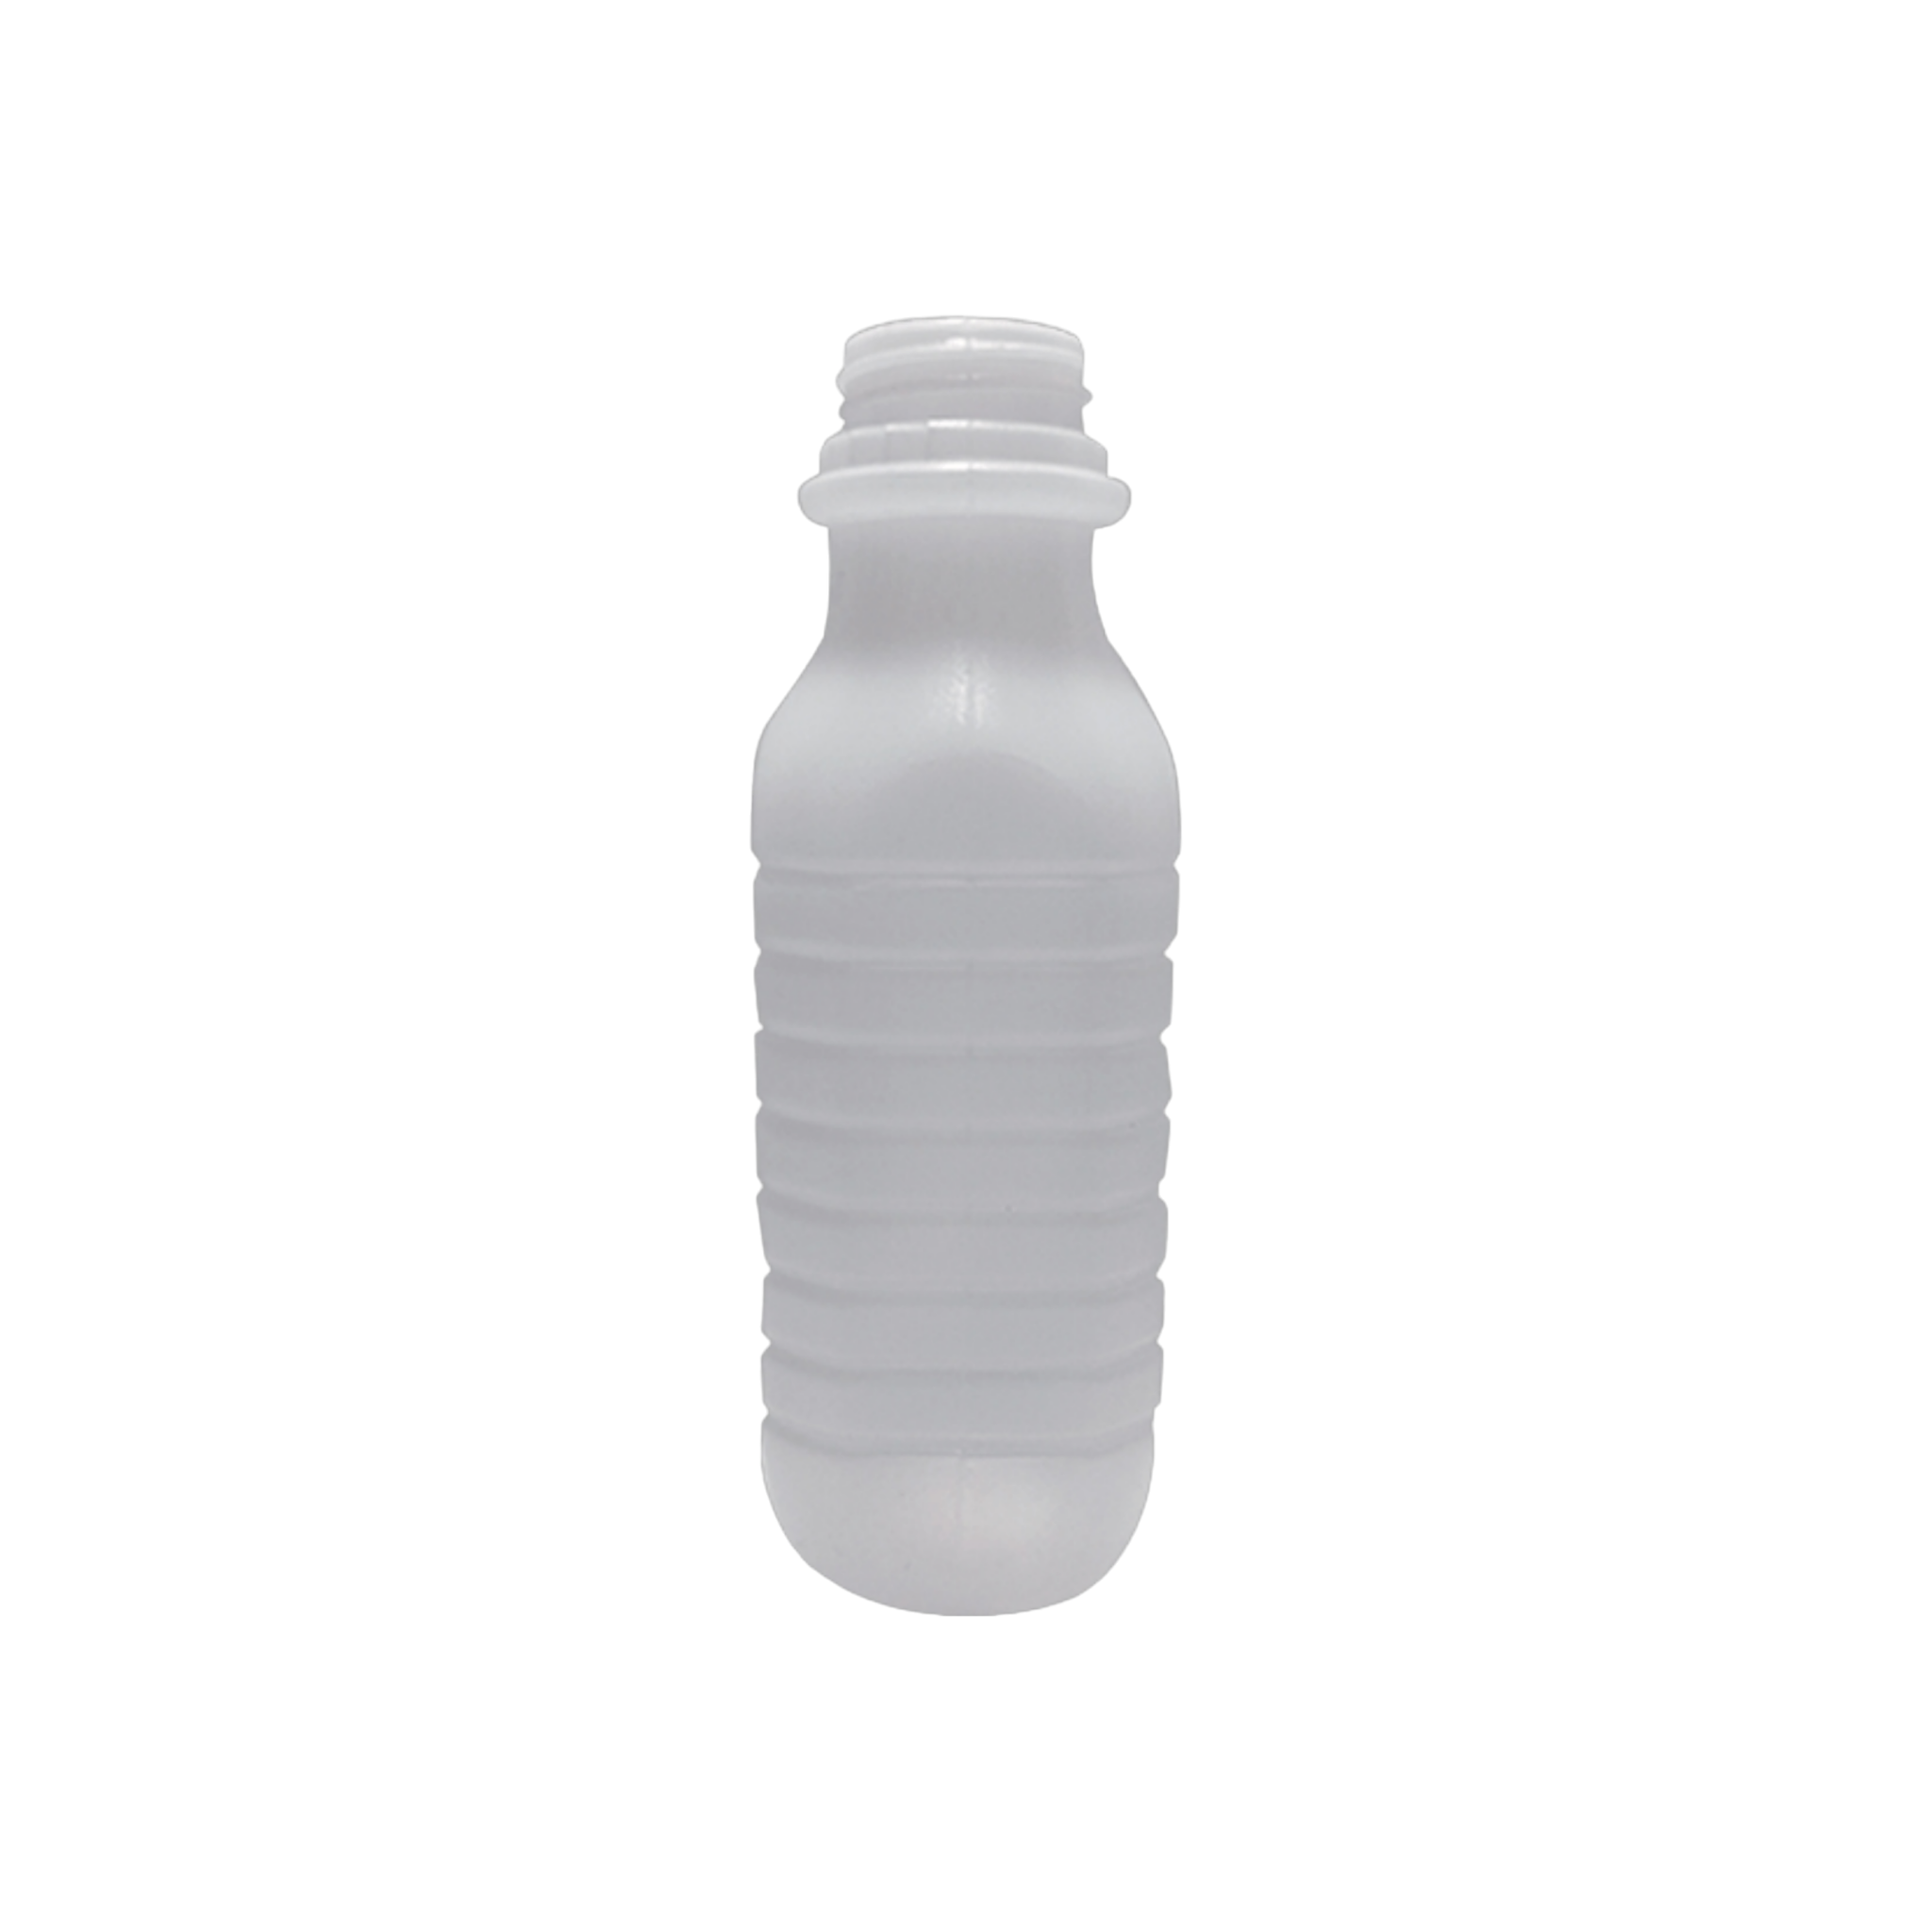 250ml Plastic Bottle Juice Square with Lids 180pack